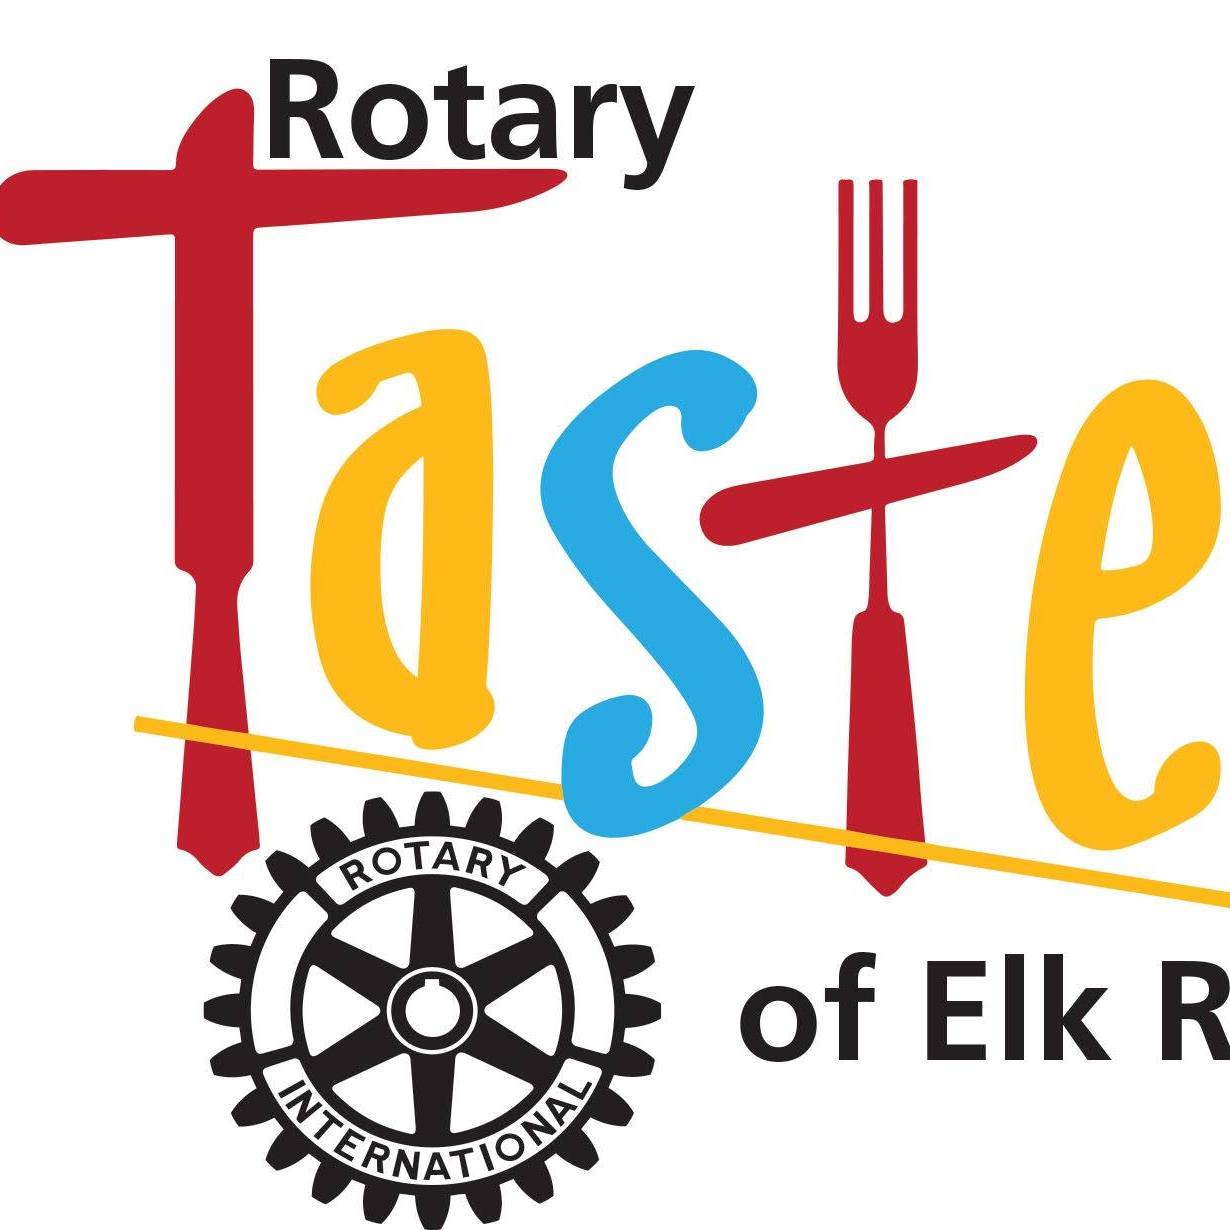 Taste of Elk River, Rotary International